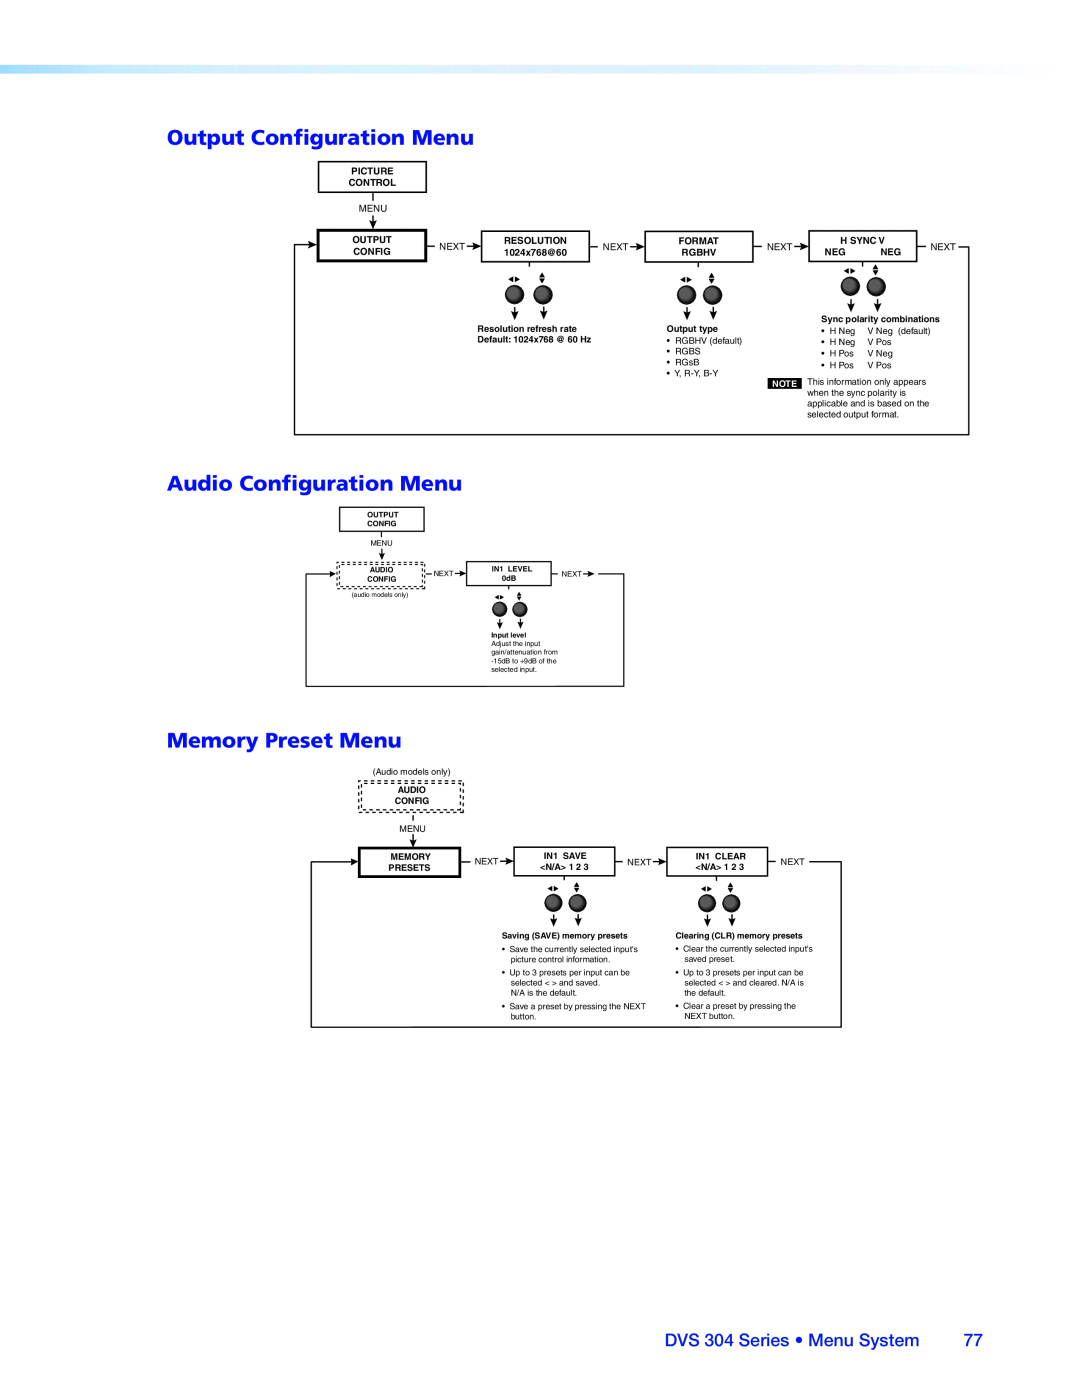 Extron electronic DVS 304 manual Output Configuration Menu, Audio Configuration Menu, Memory Preset Menu 